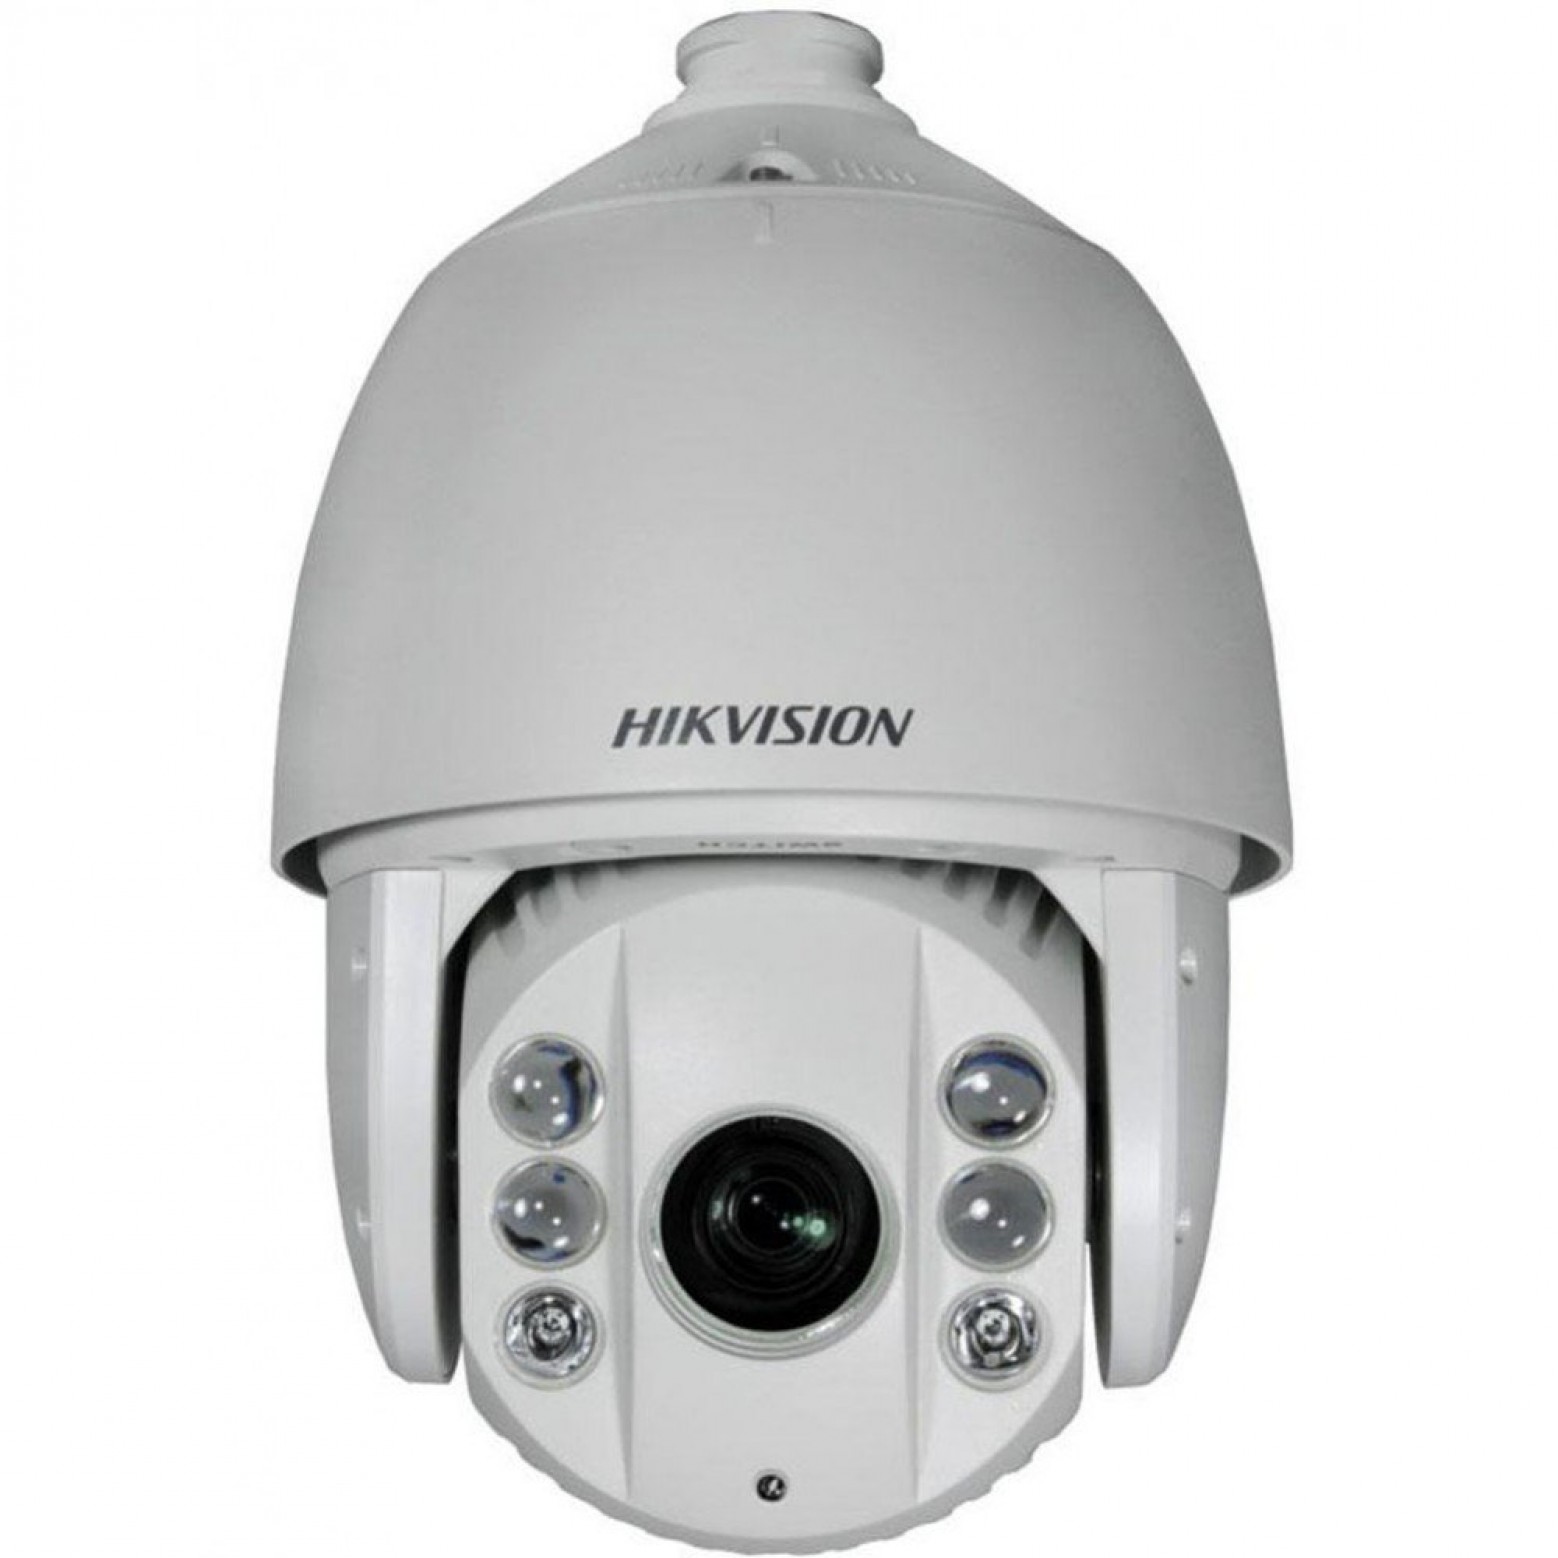 Hikvision DS-2AE7230TI Turbo PTZ camera